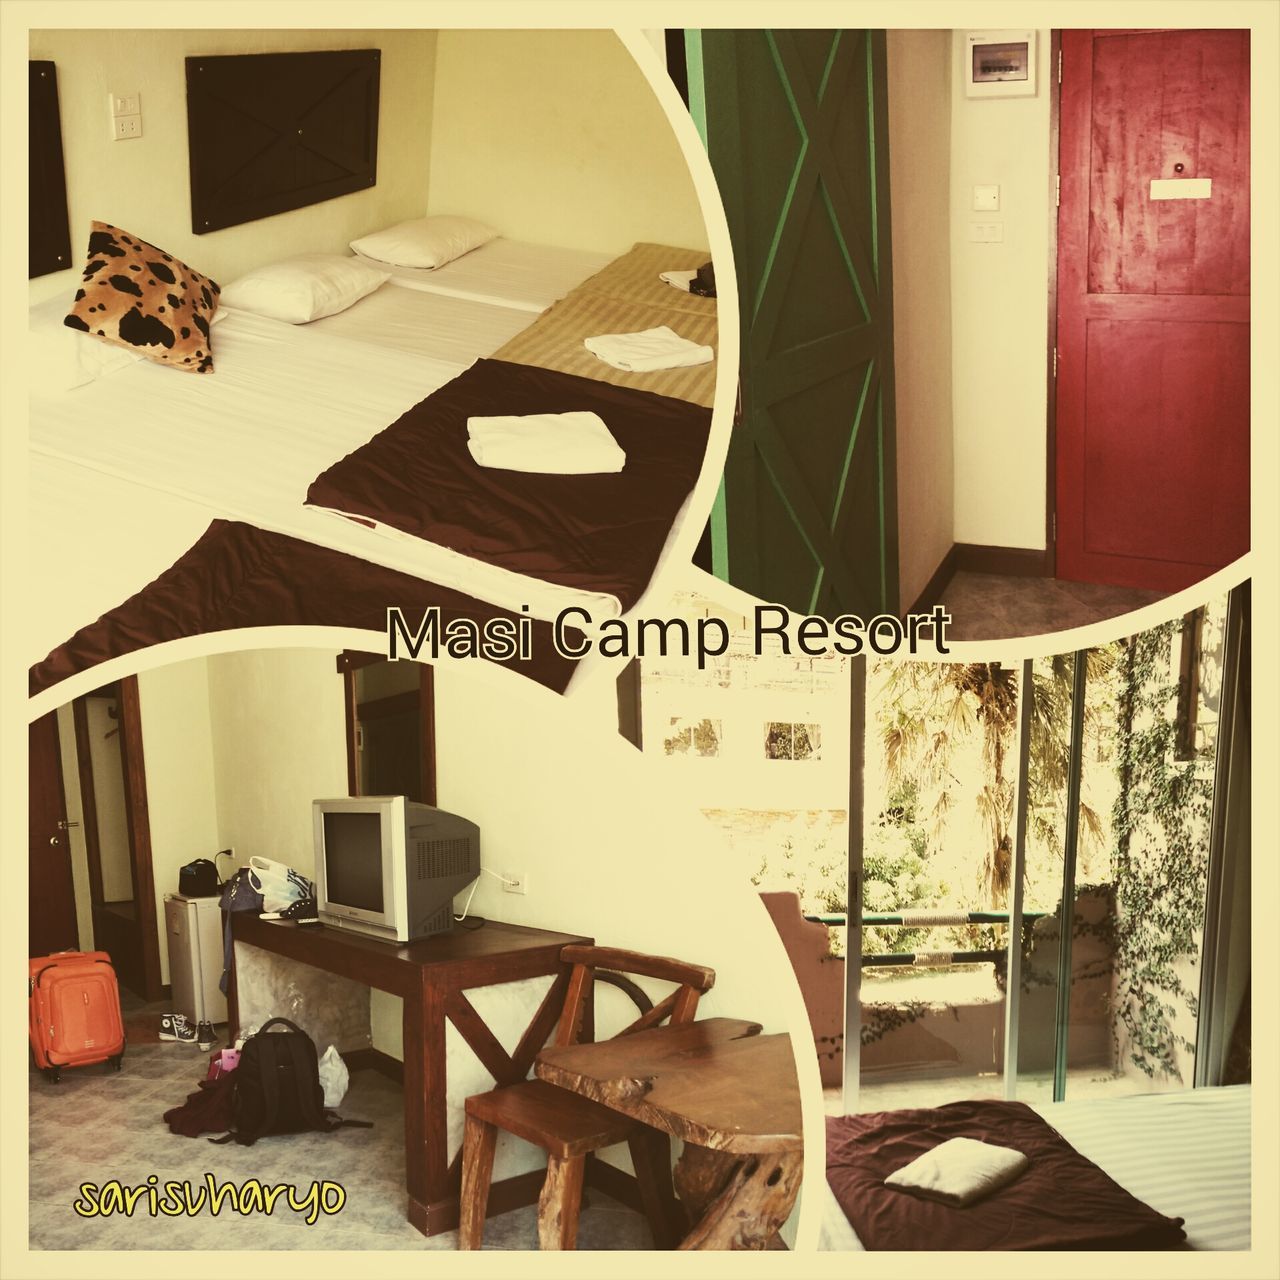 Masi Camp Resort (มาซิ แคมป์ รีสอร์ท) จ.สระบุรี